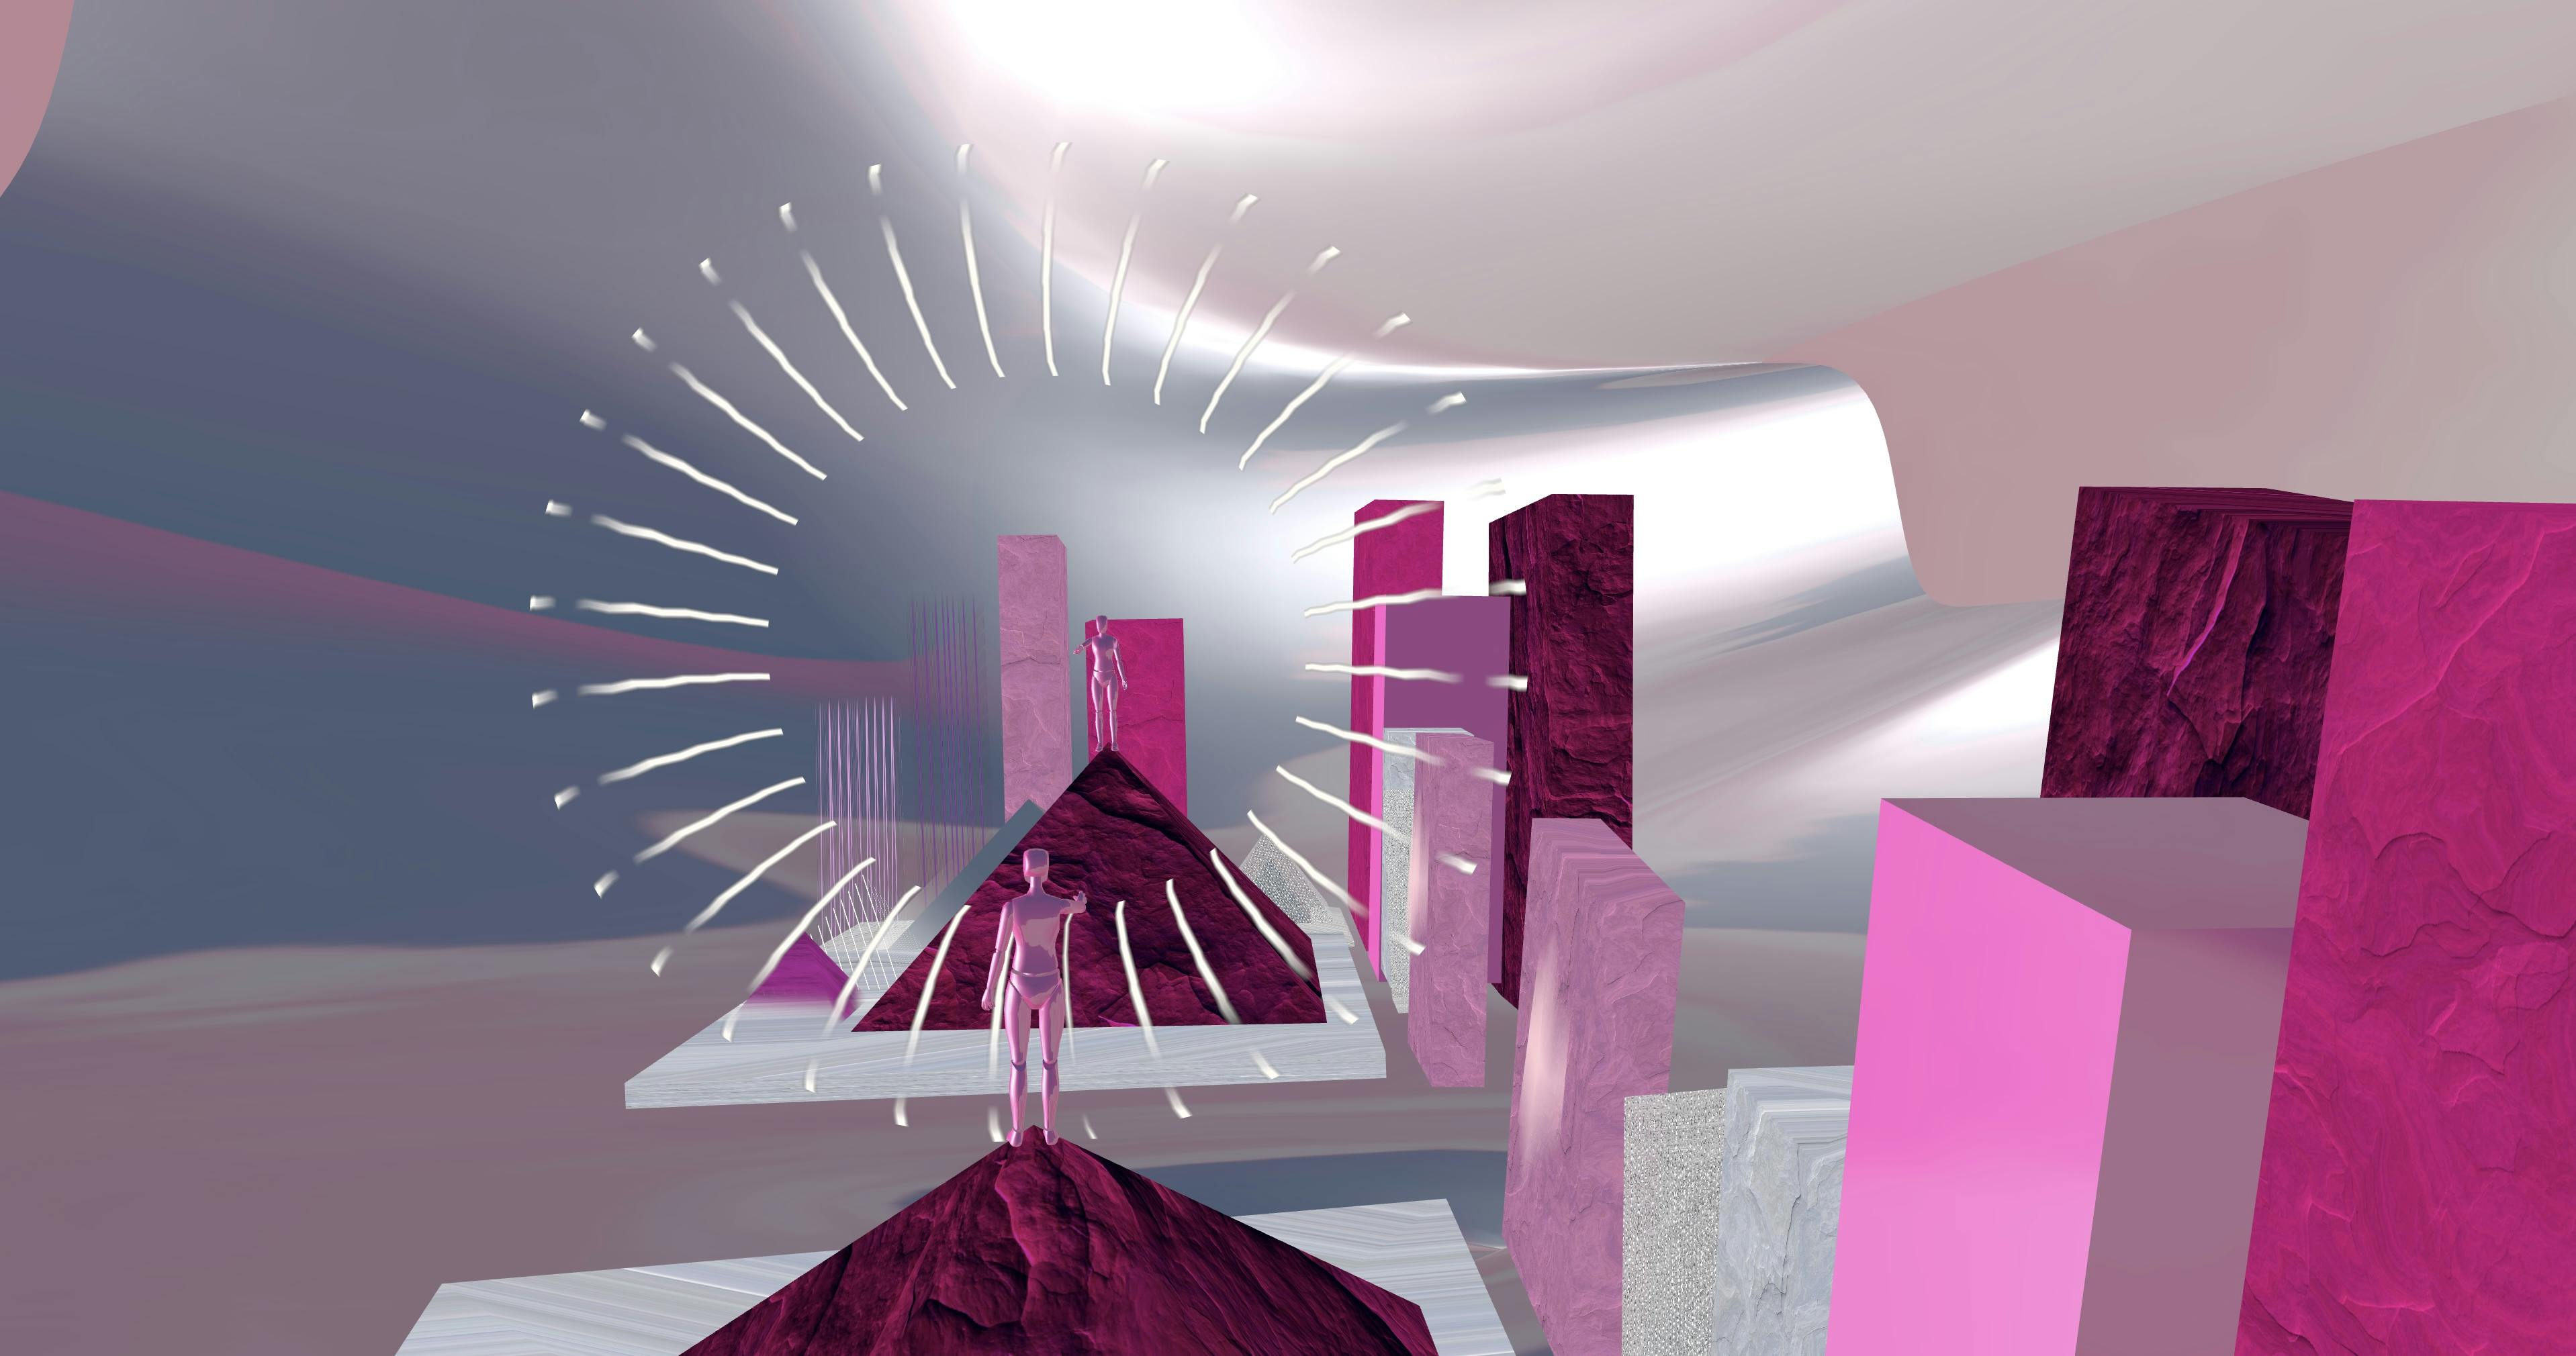 "Virtual Reality Photograph" a screenshot taken inside Creatress' VR studio.